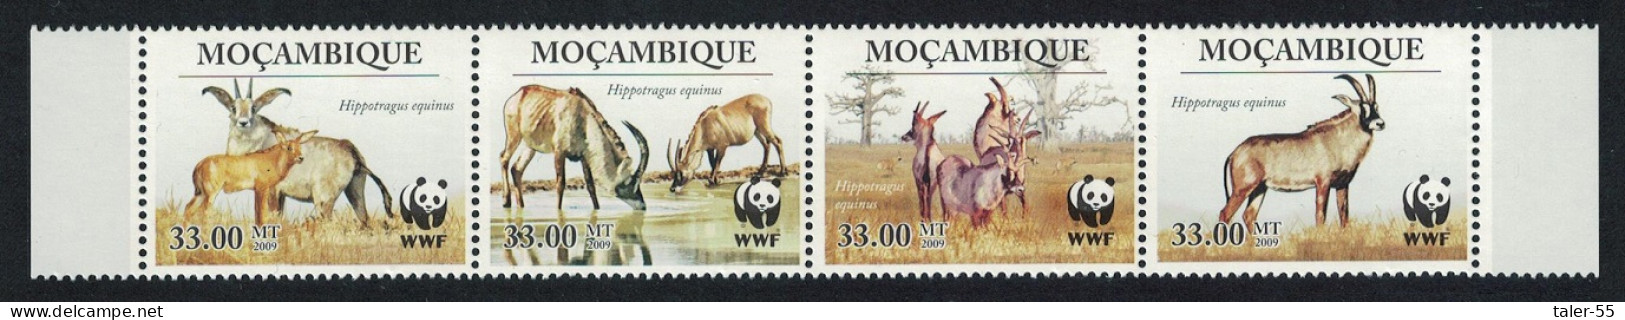 Mozambique WWF Roan Antelope Strip Of 4v 2010 MNH MI#3658-3661 Sc#1930 - Mozambique